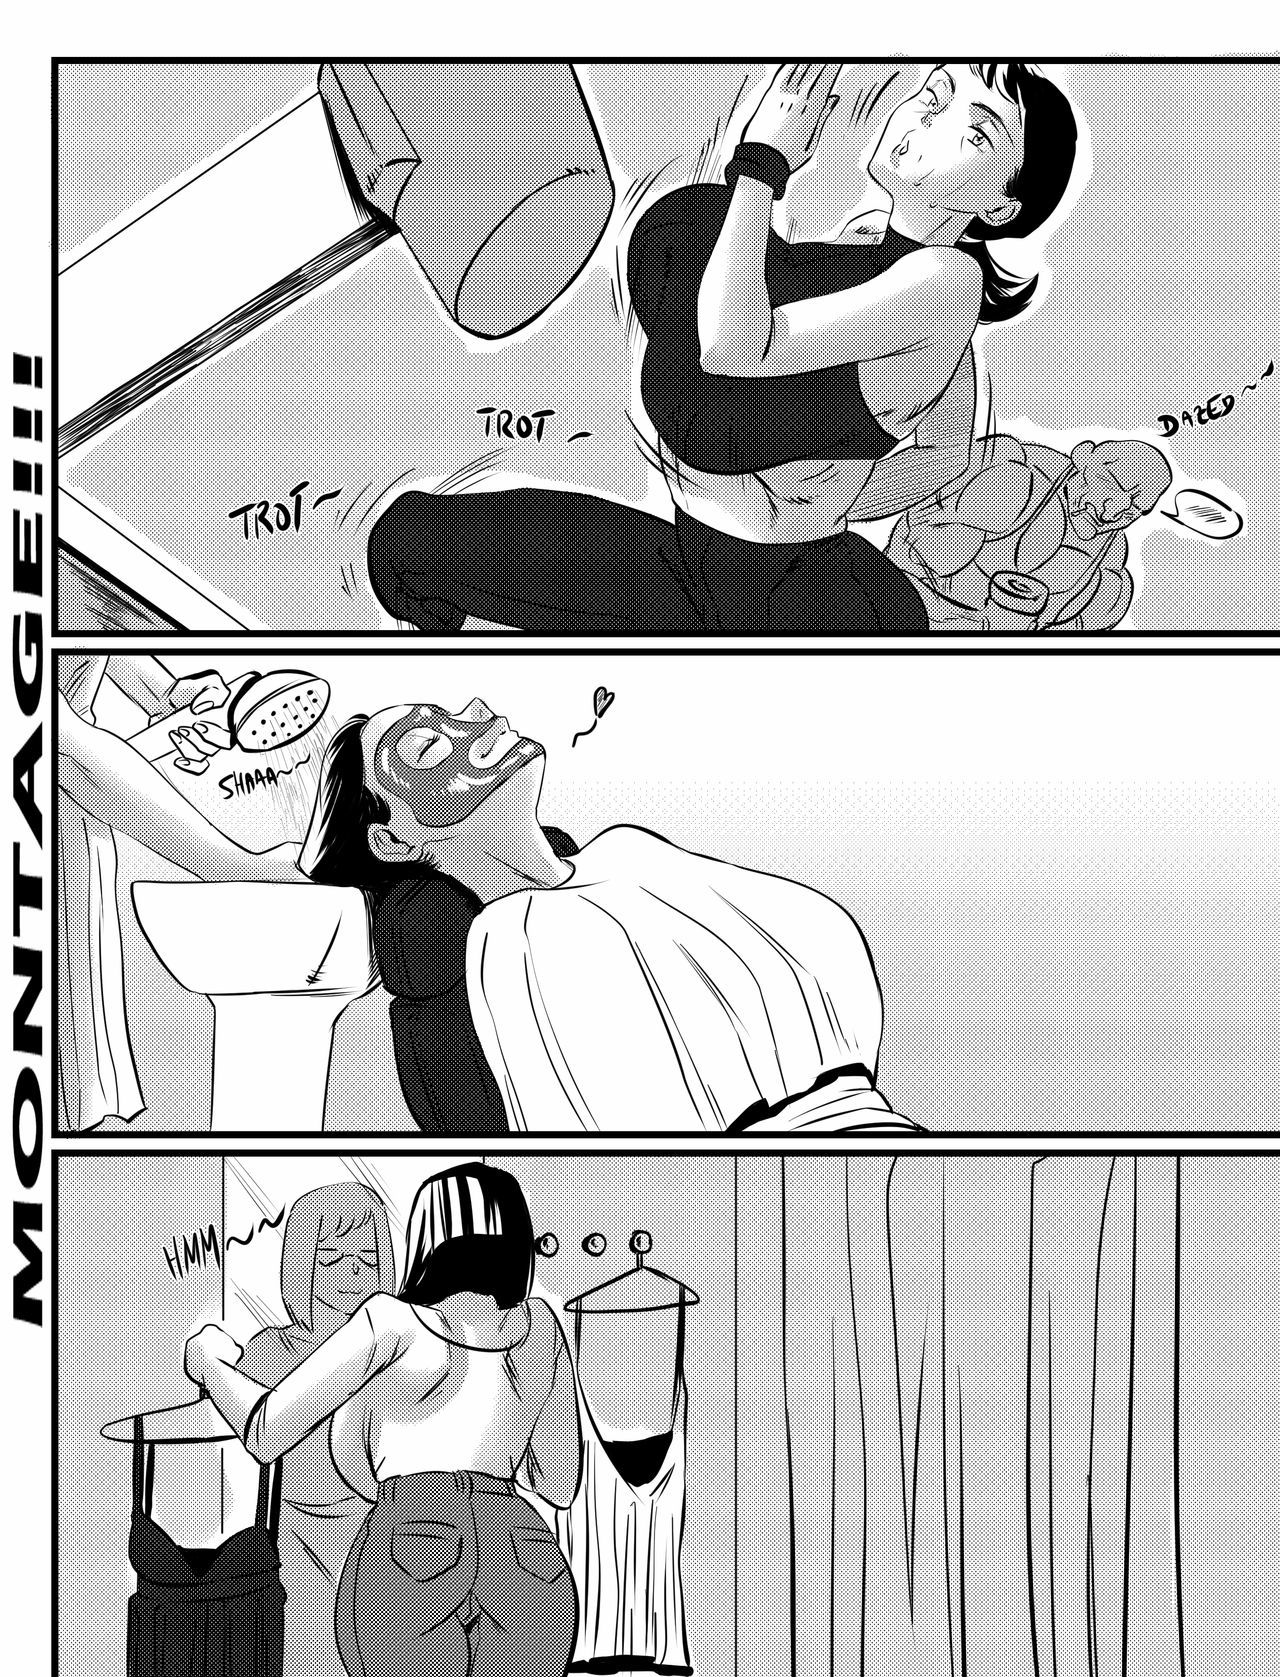 Frosty Date Night by Aarokira page 4